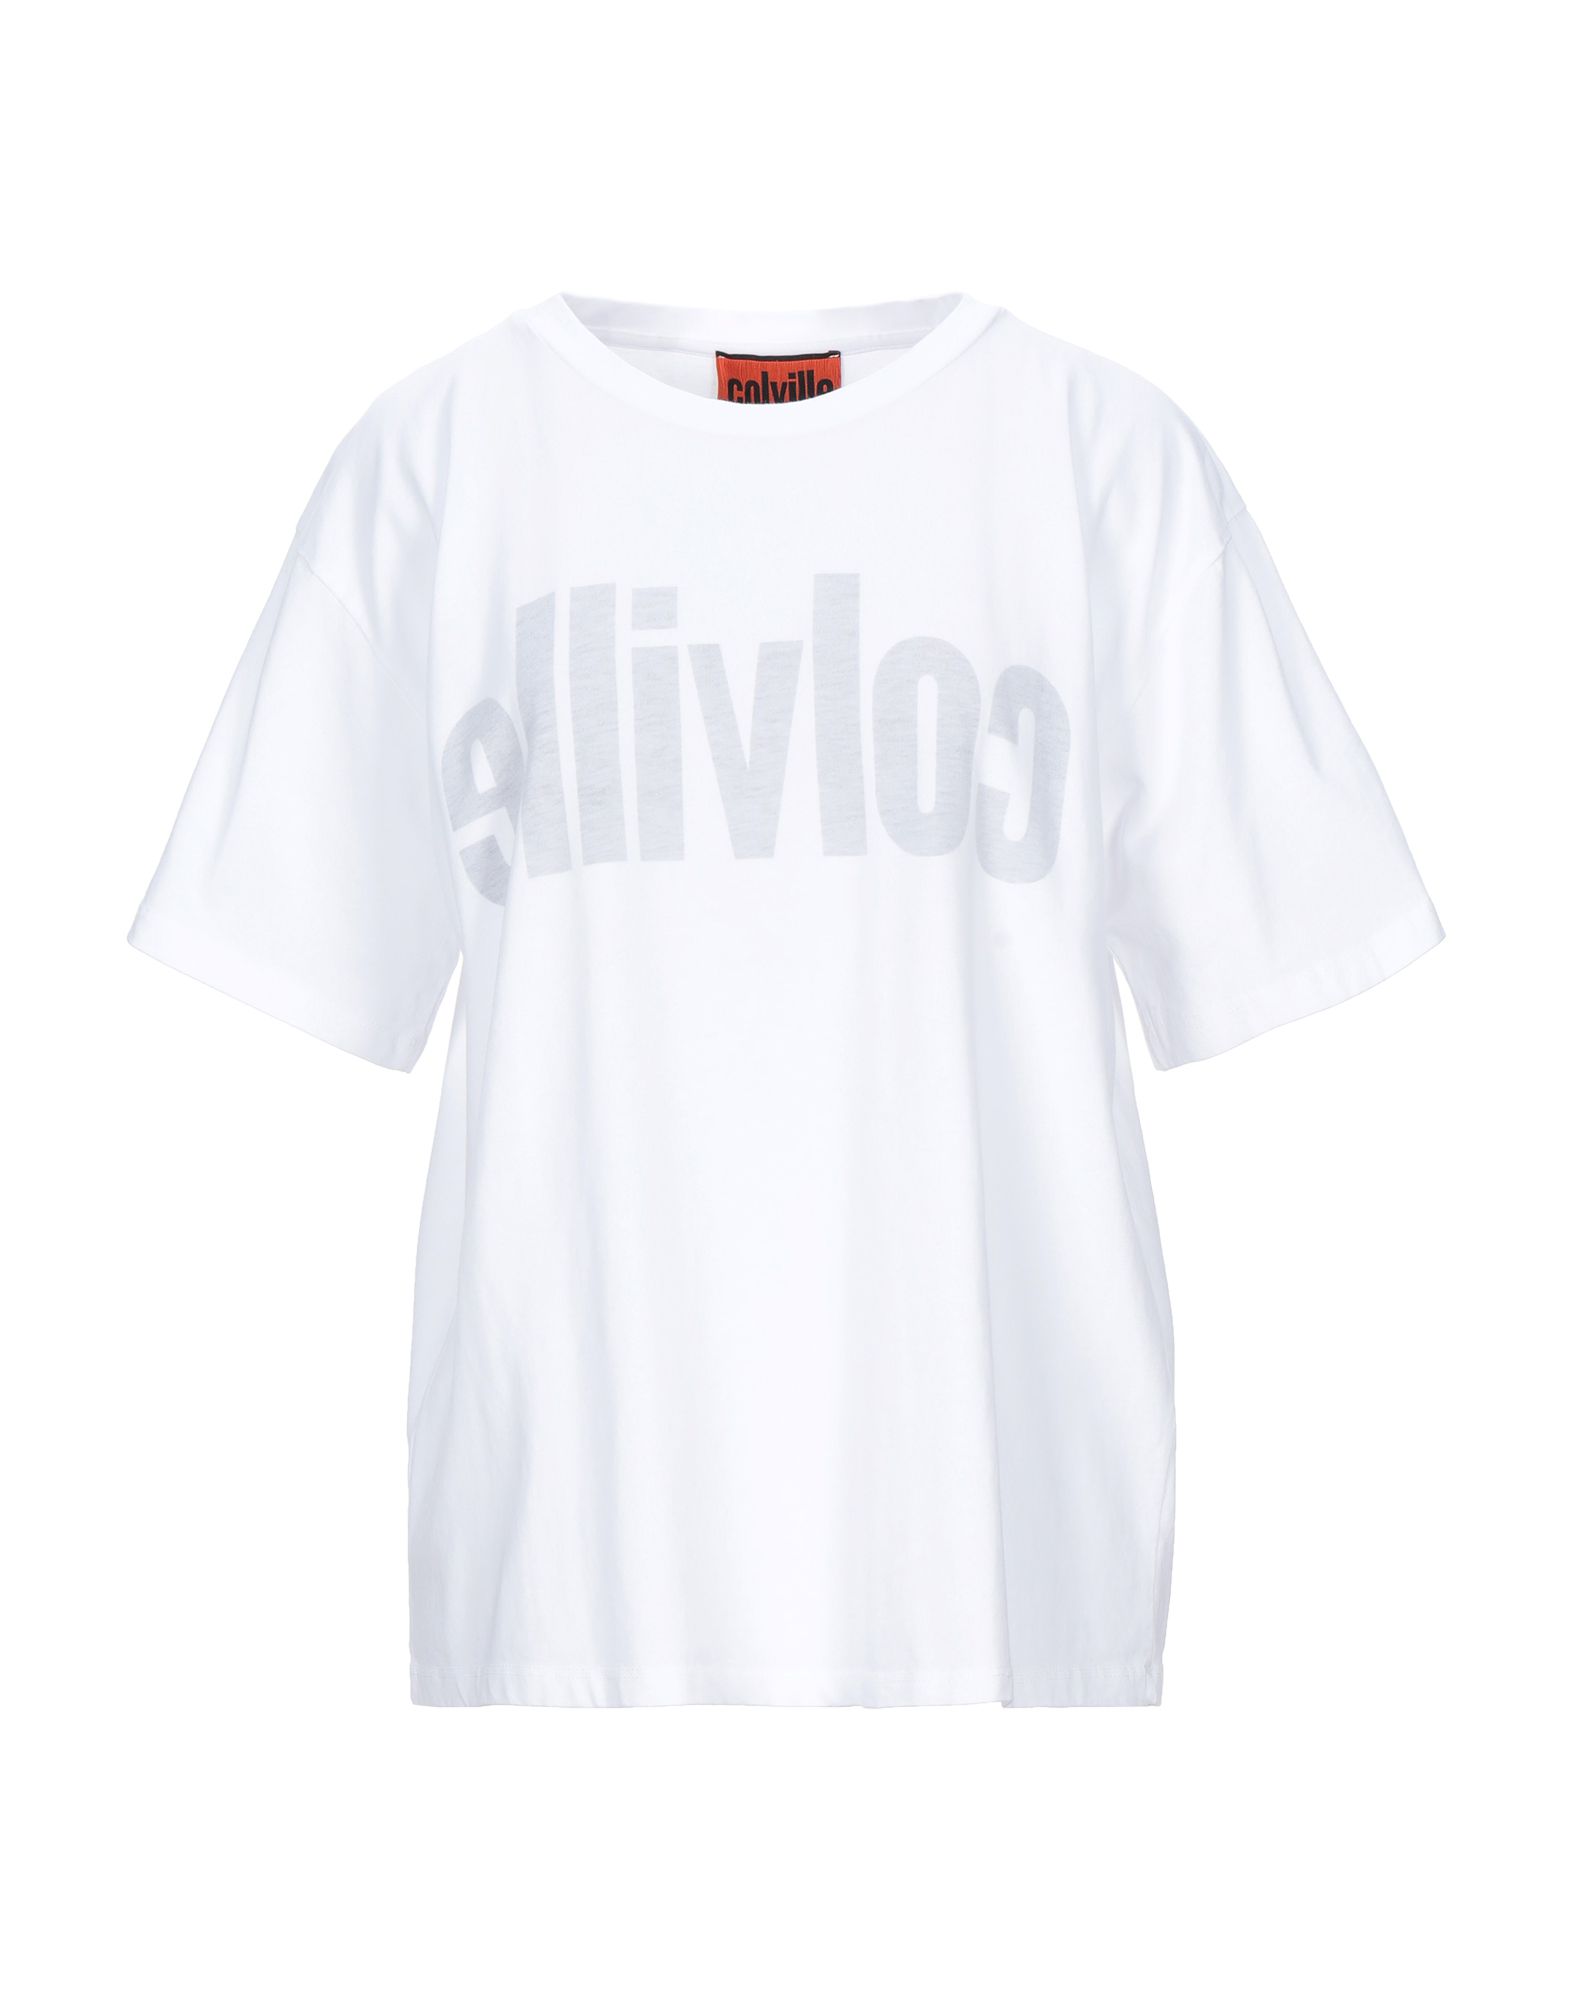 COLVILLE T-shirts - Item 12490245